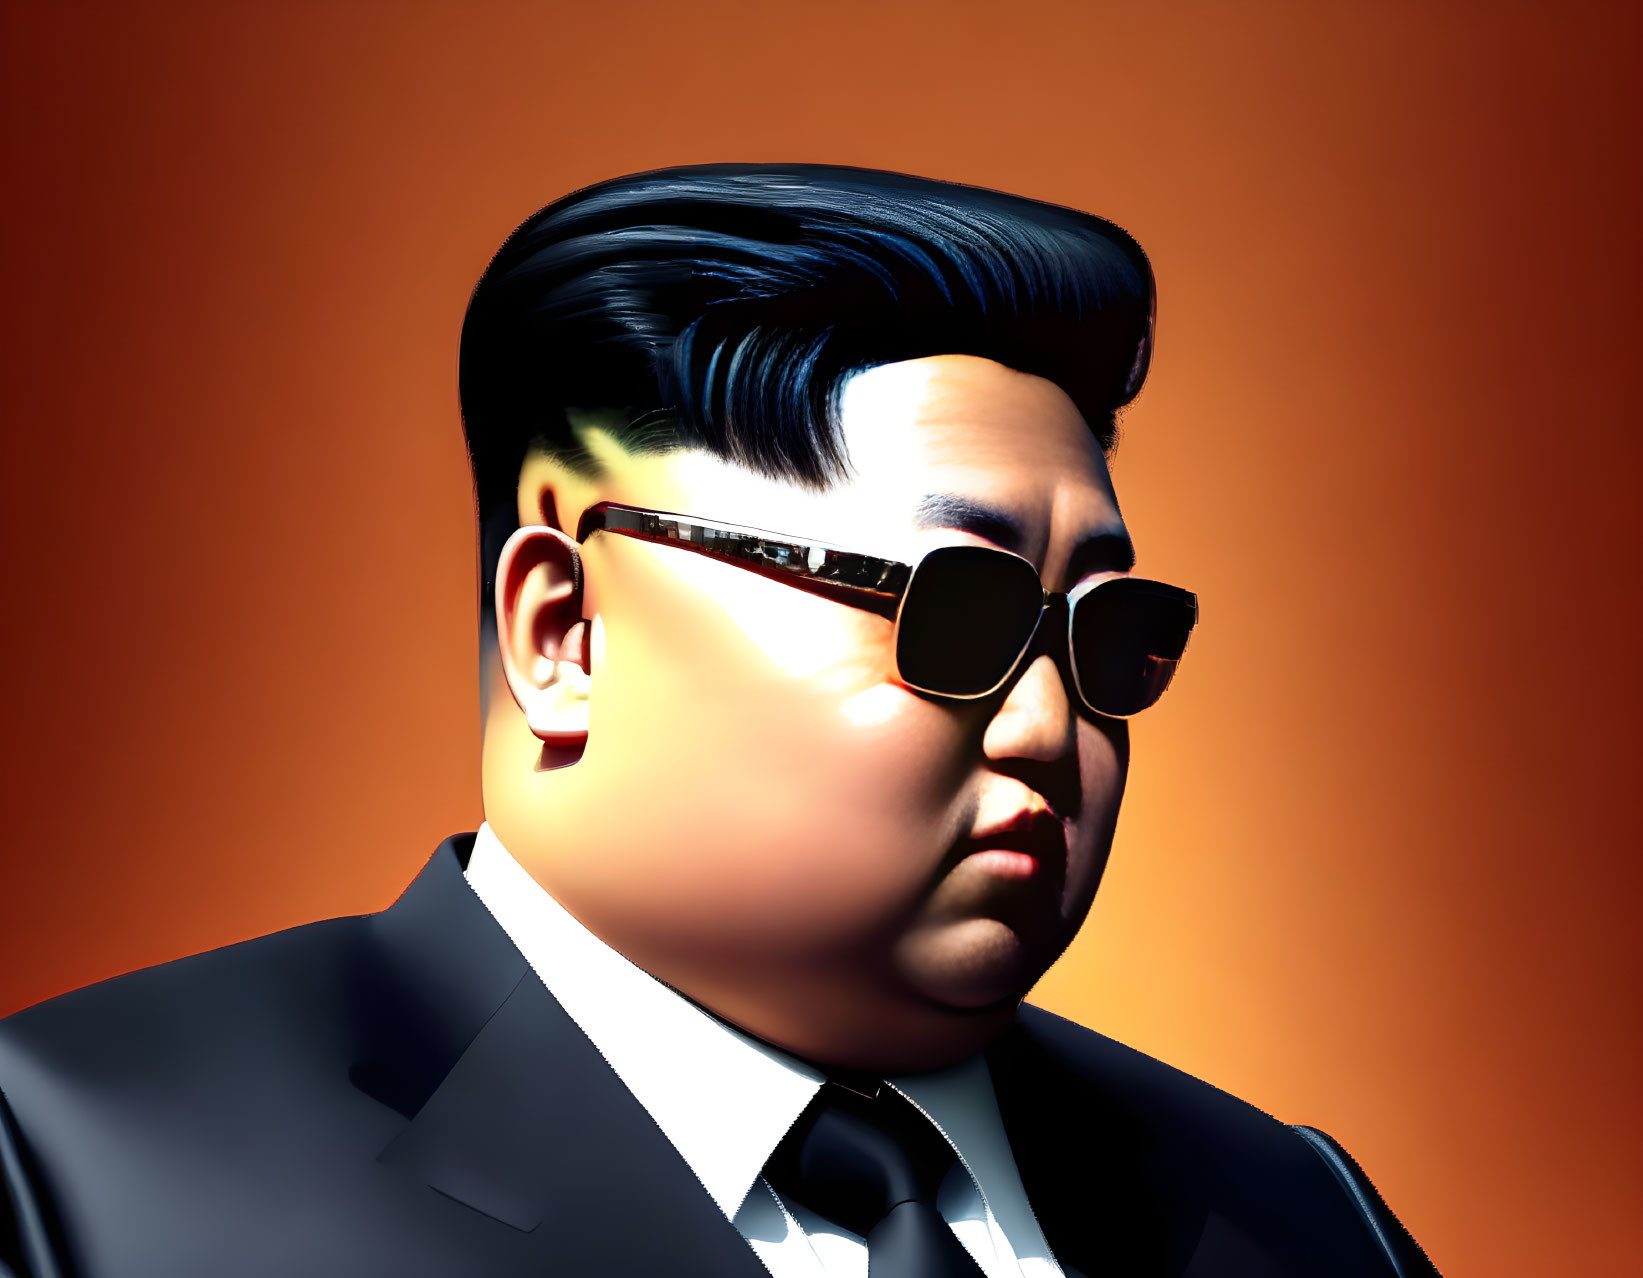 Kim Jong-un in Matrix. 